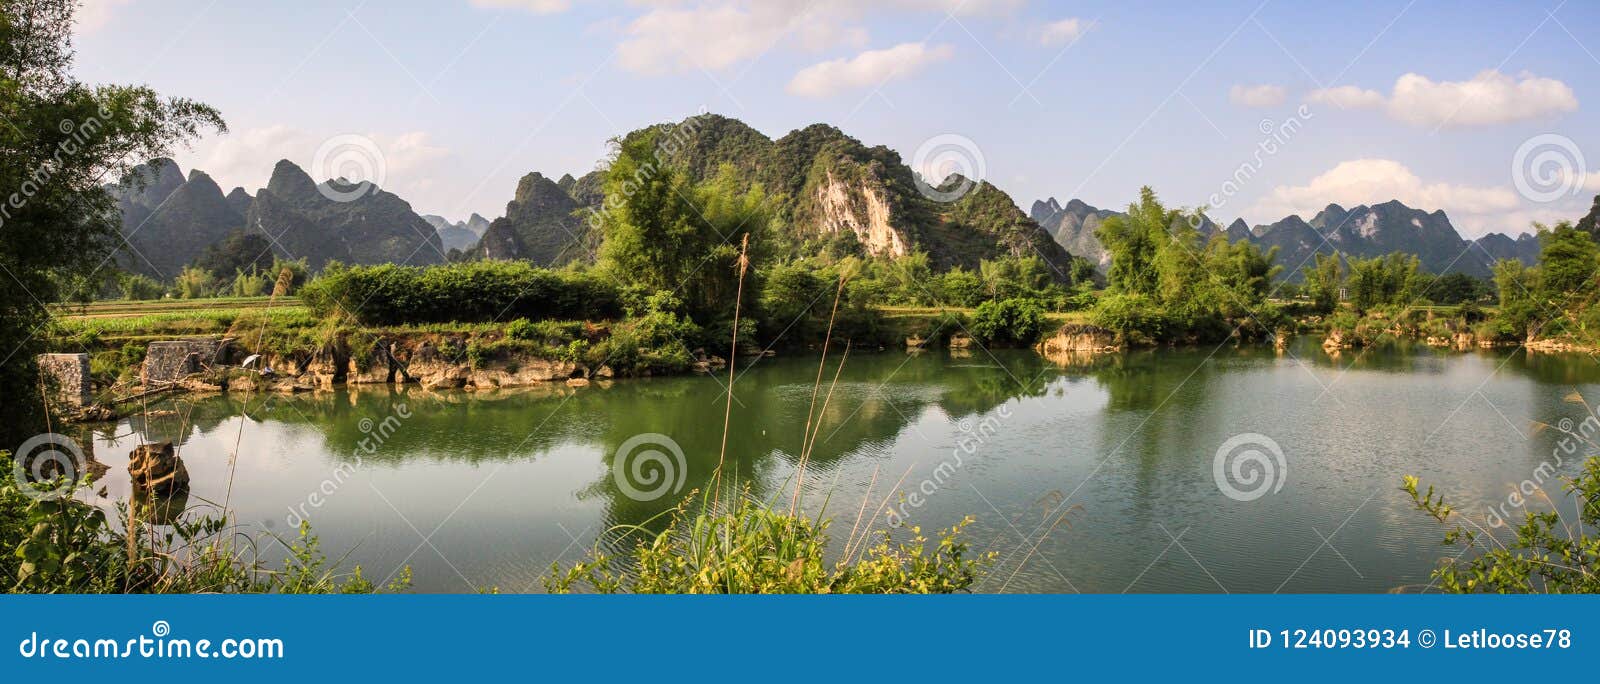 the beautiful cao bang province near the ban gioc waterfall, cao bang province, vietnam